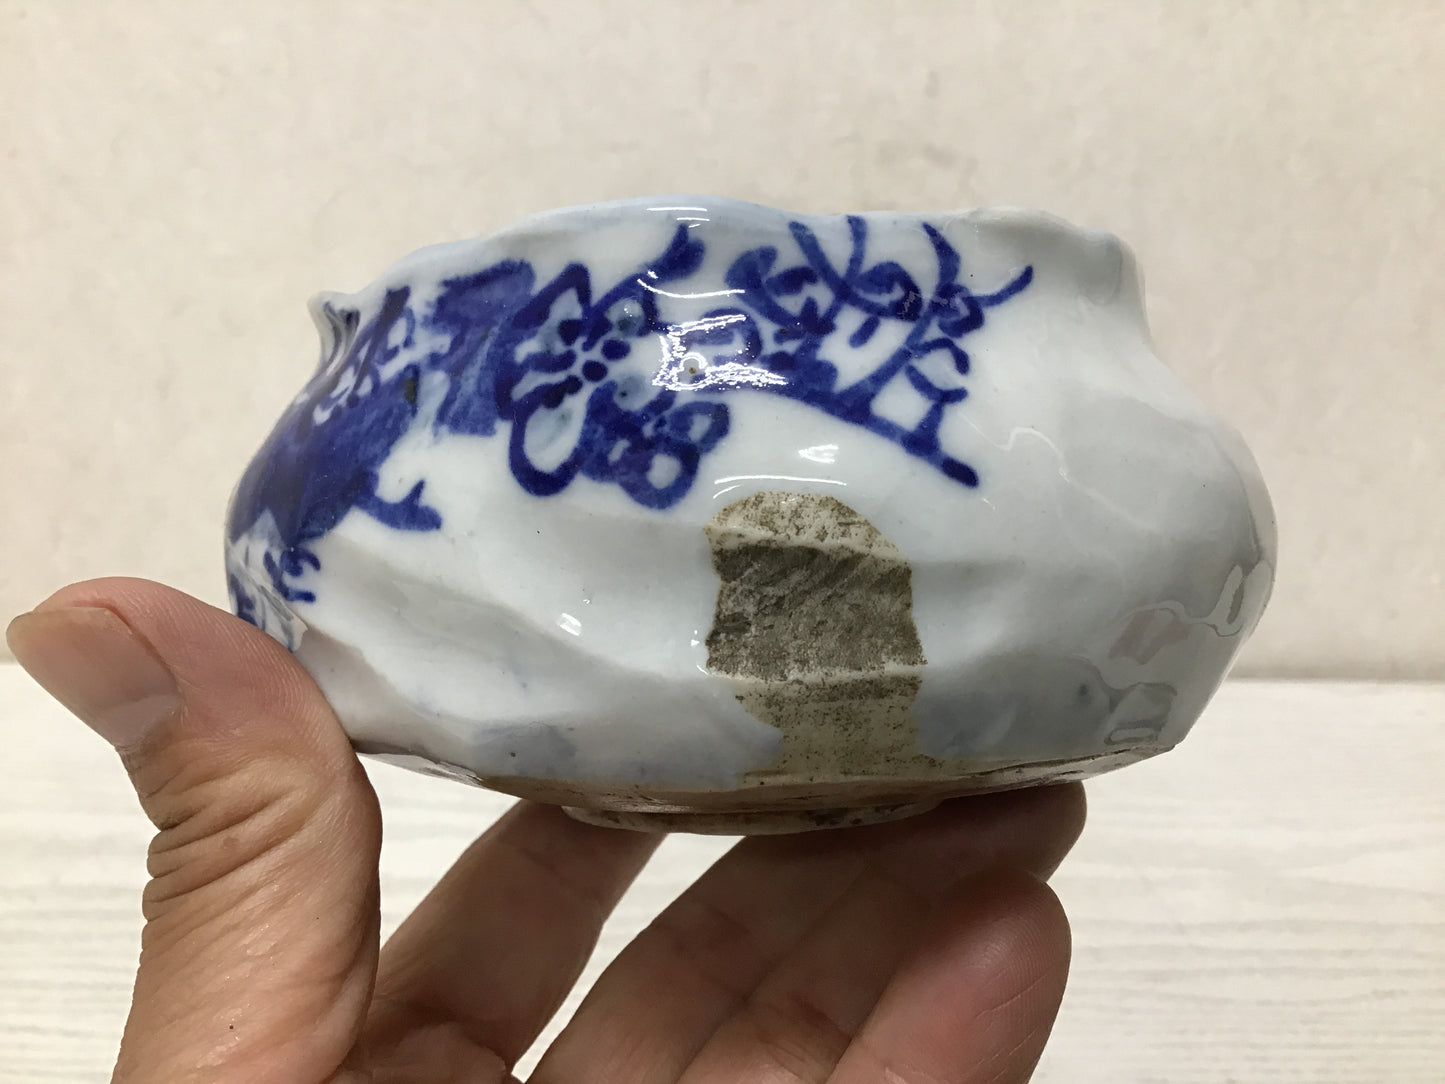 Y1843 CHAWAN Seto-ware signed box Japanese bowl pottery Japan tea ceremony